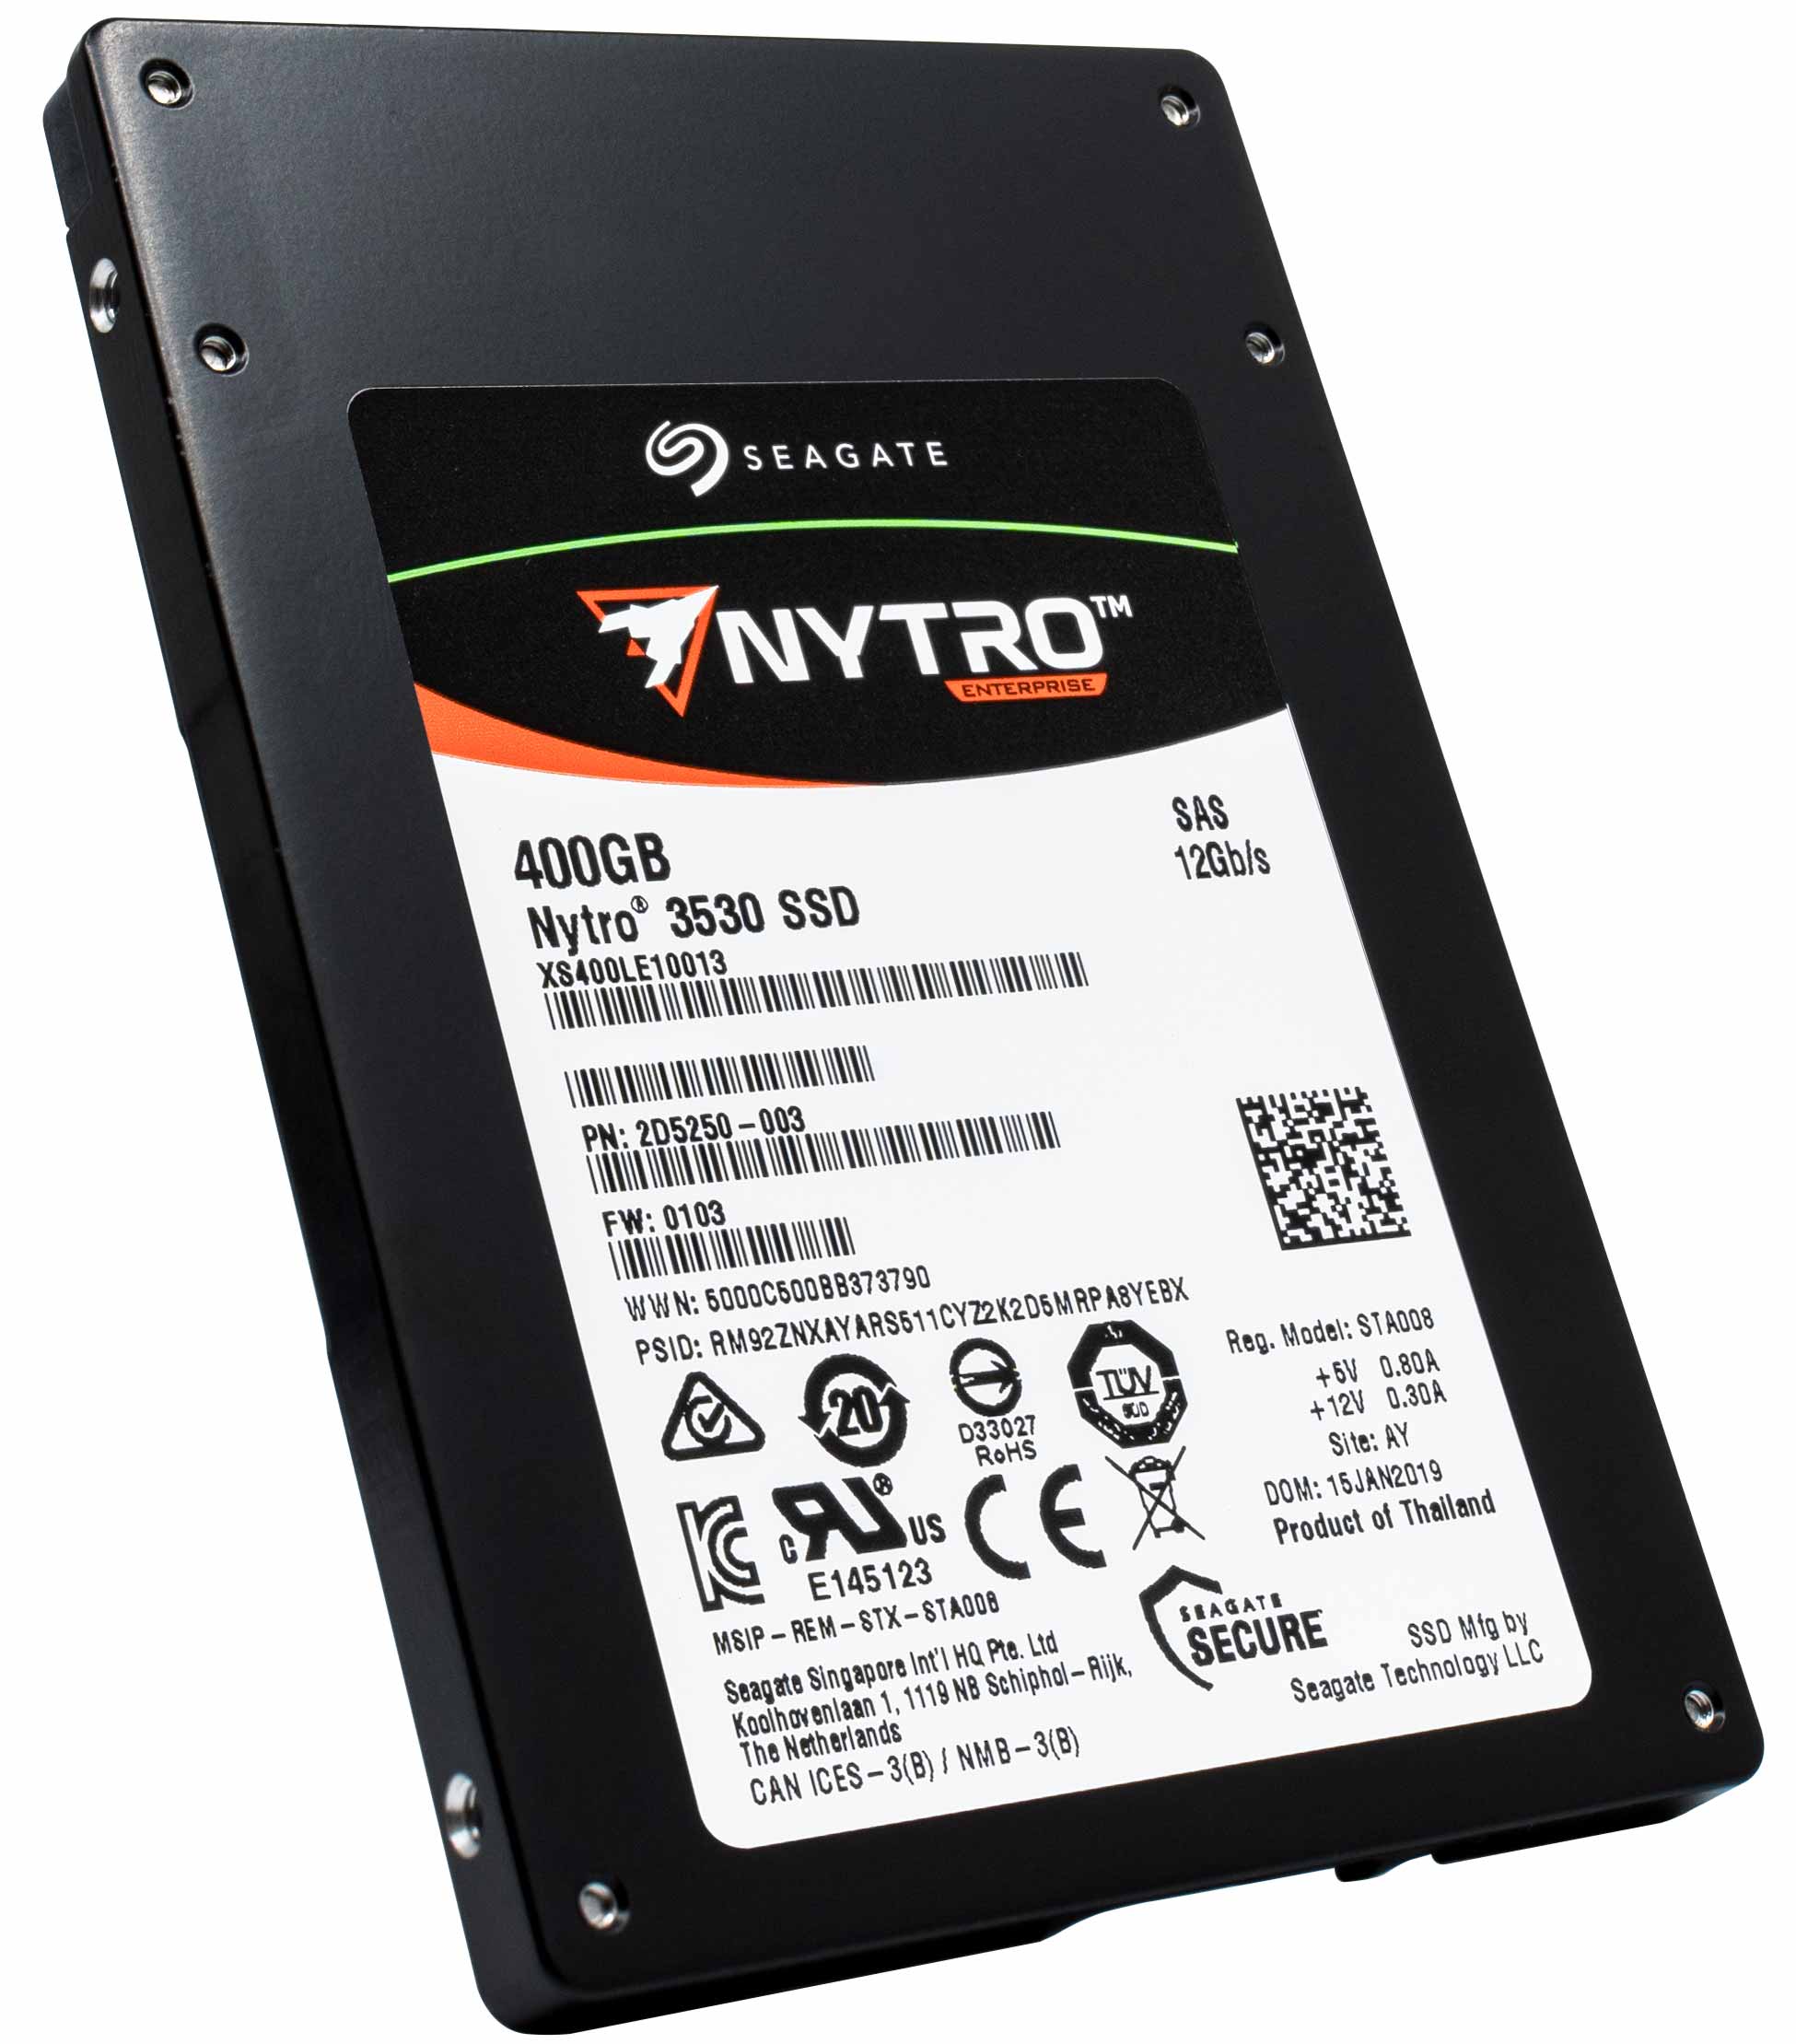 Seagate Nytro 3530 XS400LE10013 400GB SAS 12Gb/s 2.5" Solid State Drive